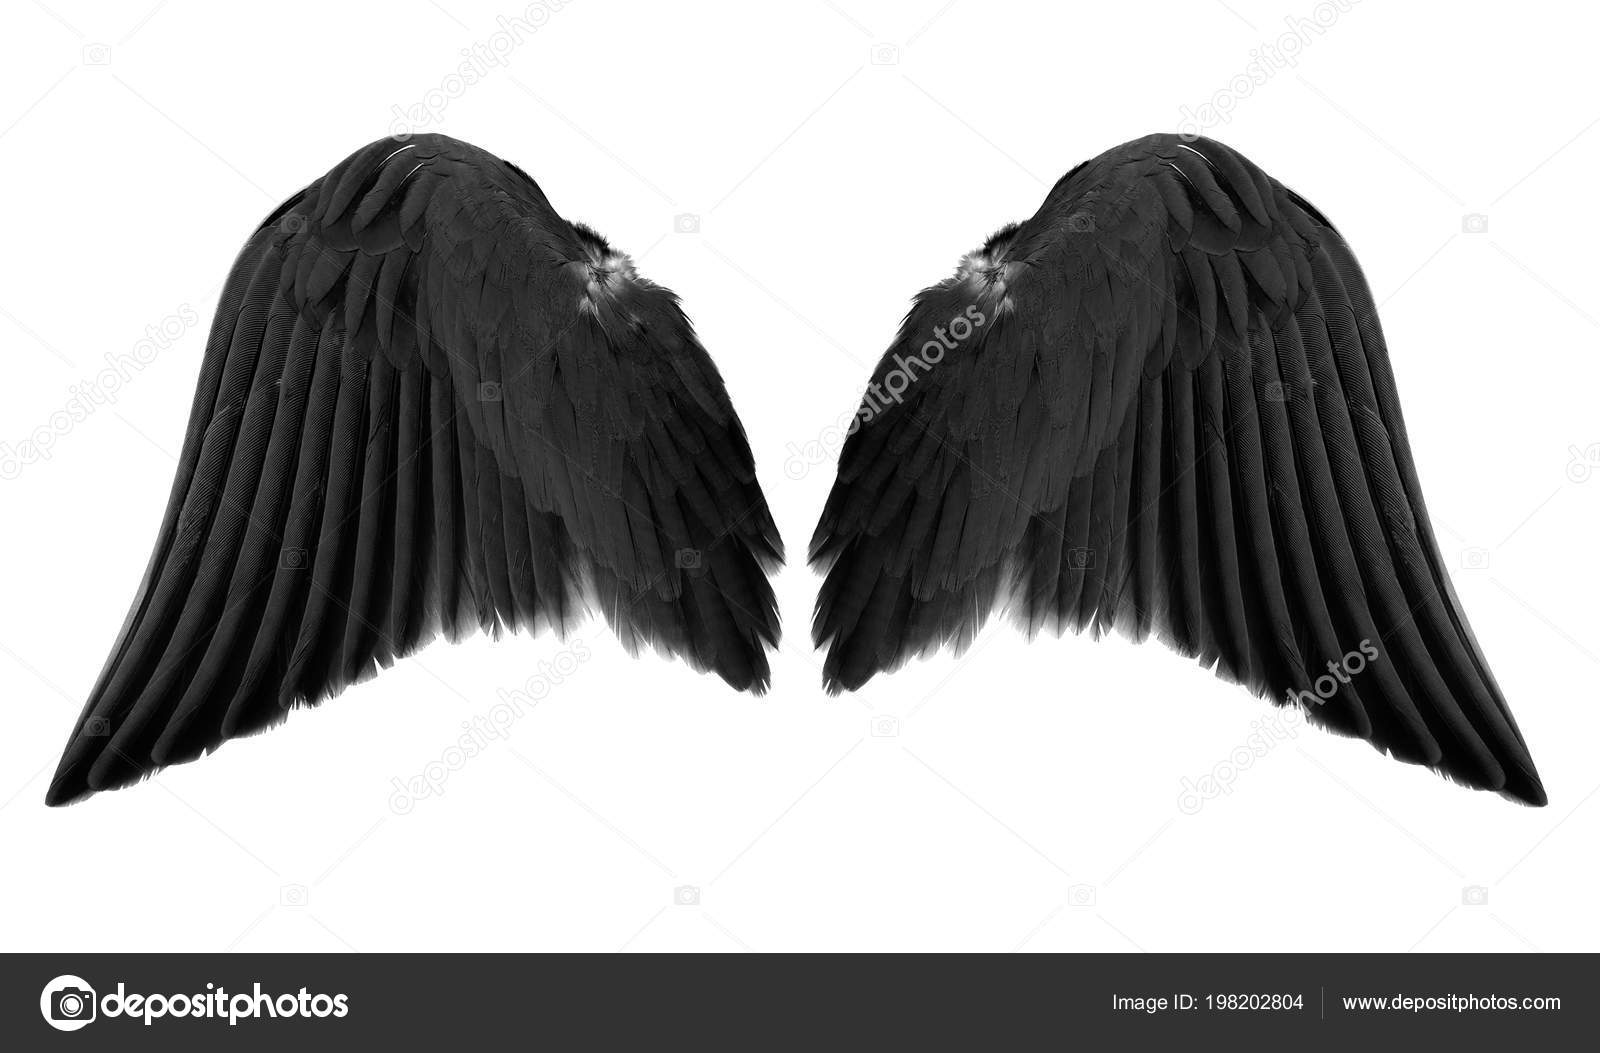 https://st4.depositphotos.com/2807103/19820/i/1600/depositphotos_198202804-stock-photo-black-angel-wings-isolated-white.jpg